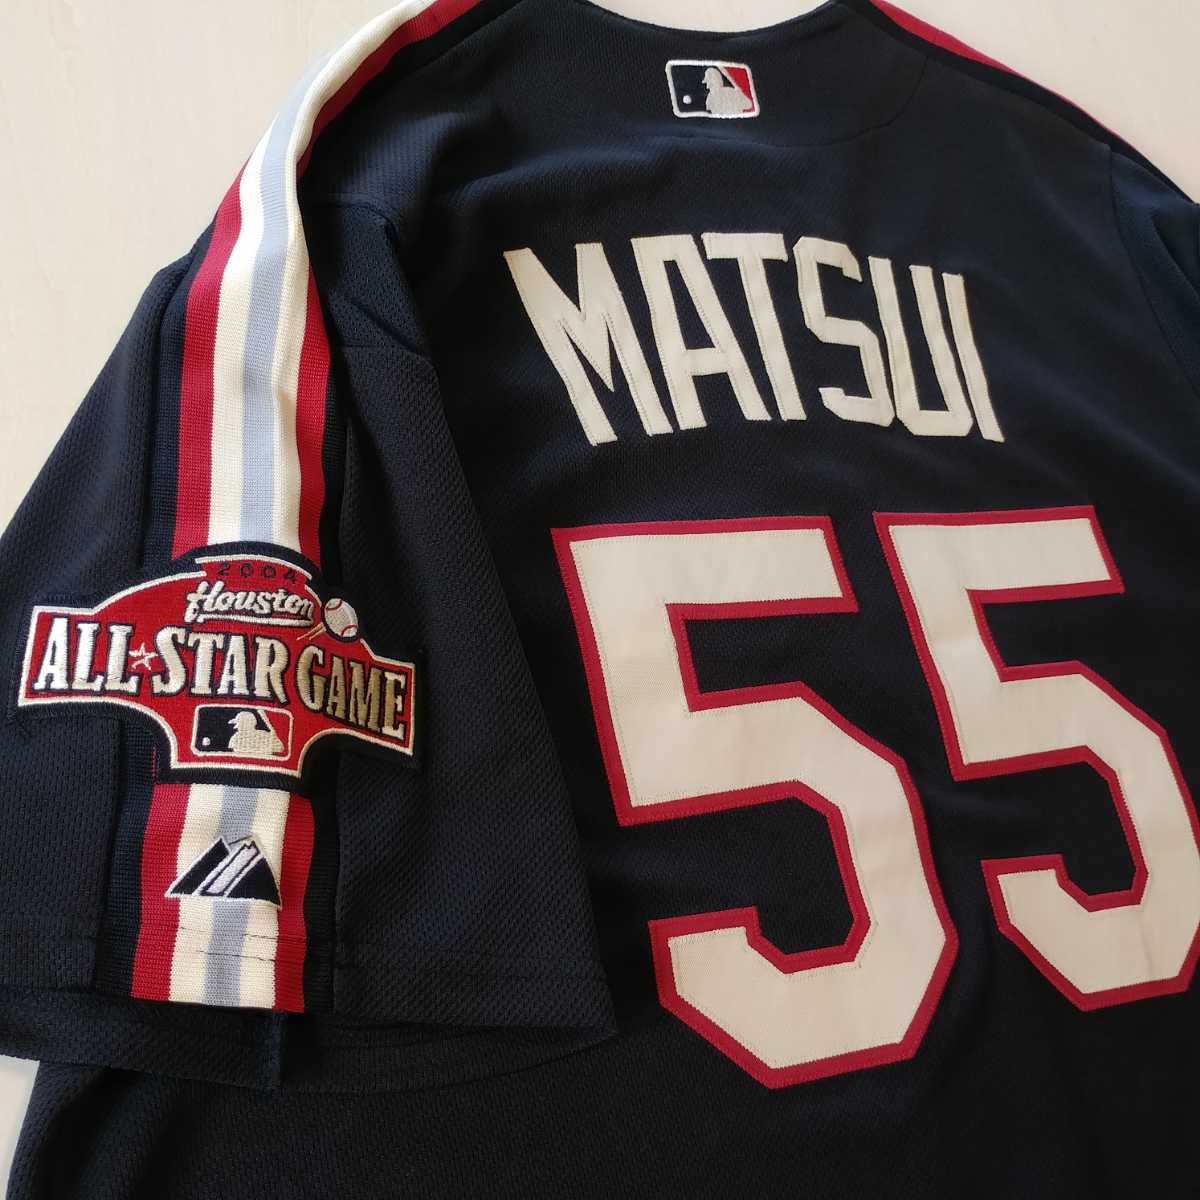 majestic 松井秀喜 ユニフォーム MLB ALLSTAR GAME 2004 背番号55 NY